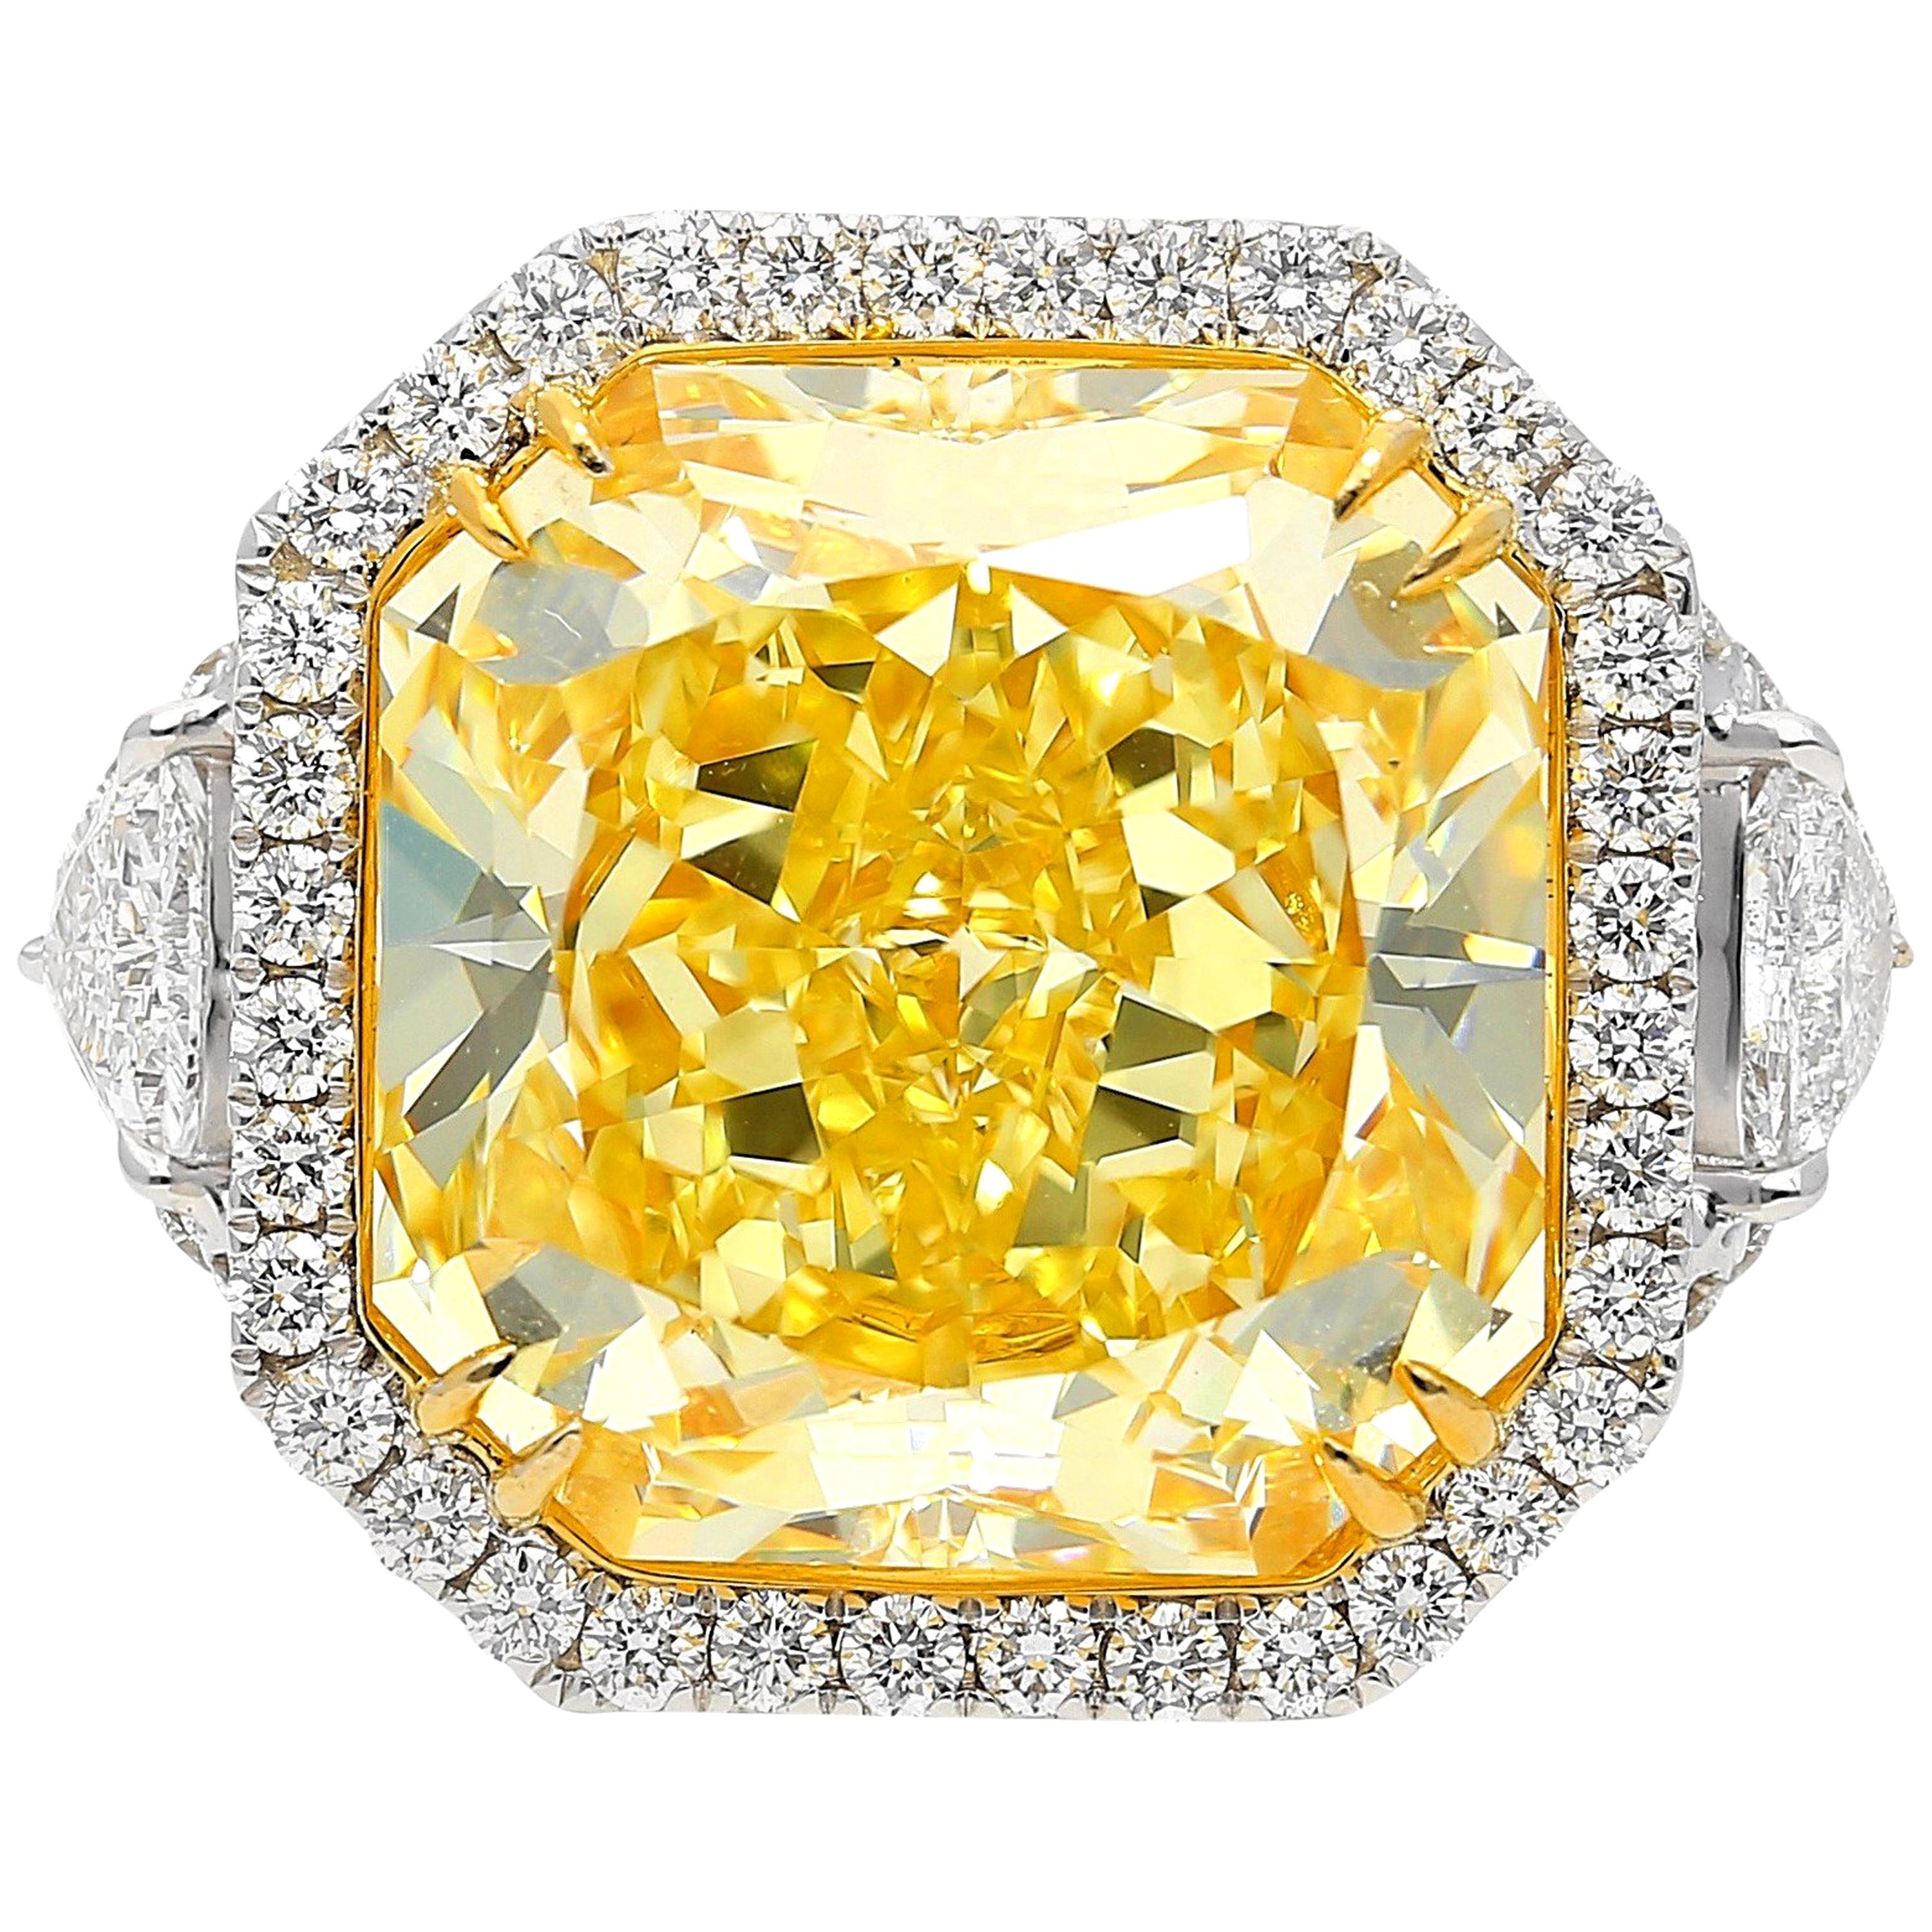 GIA Certified 13.14 Carat Fancy Intense Yellow "VVS1" Clarity Diamond Ring For Sale